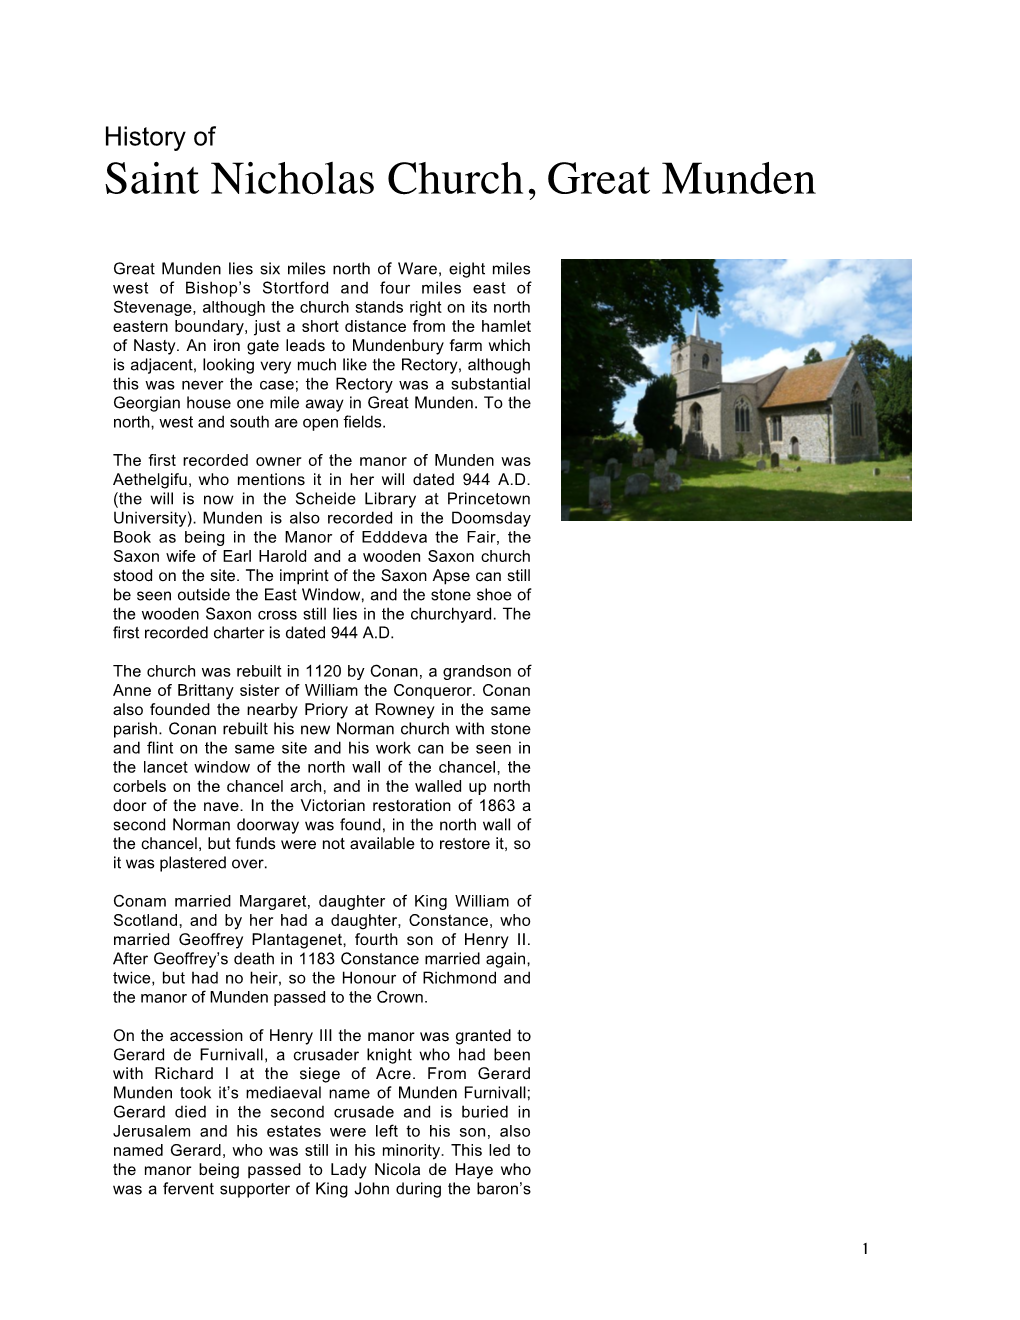 Saint Nicholas Church, Great Munden